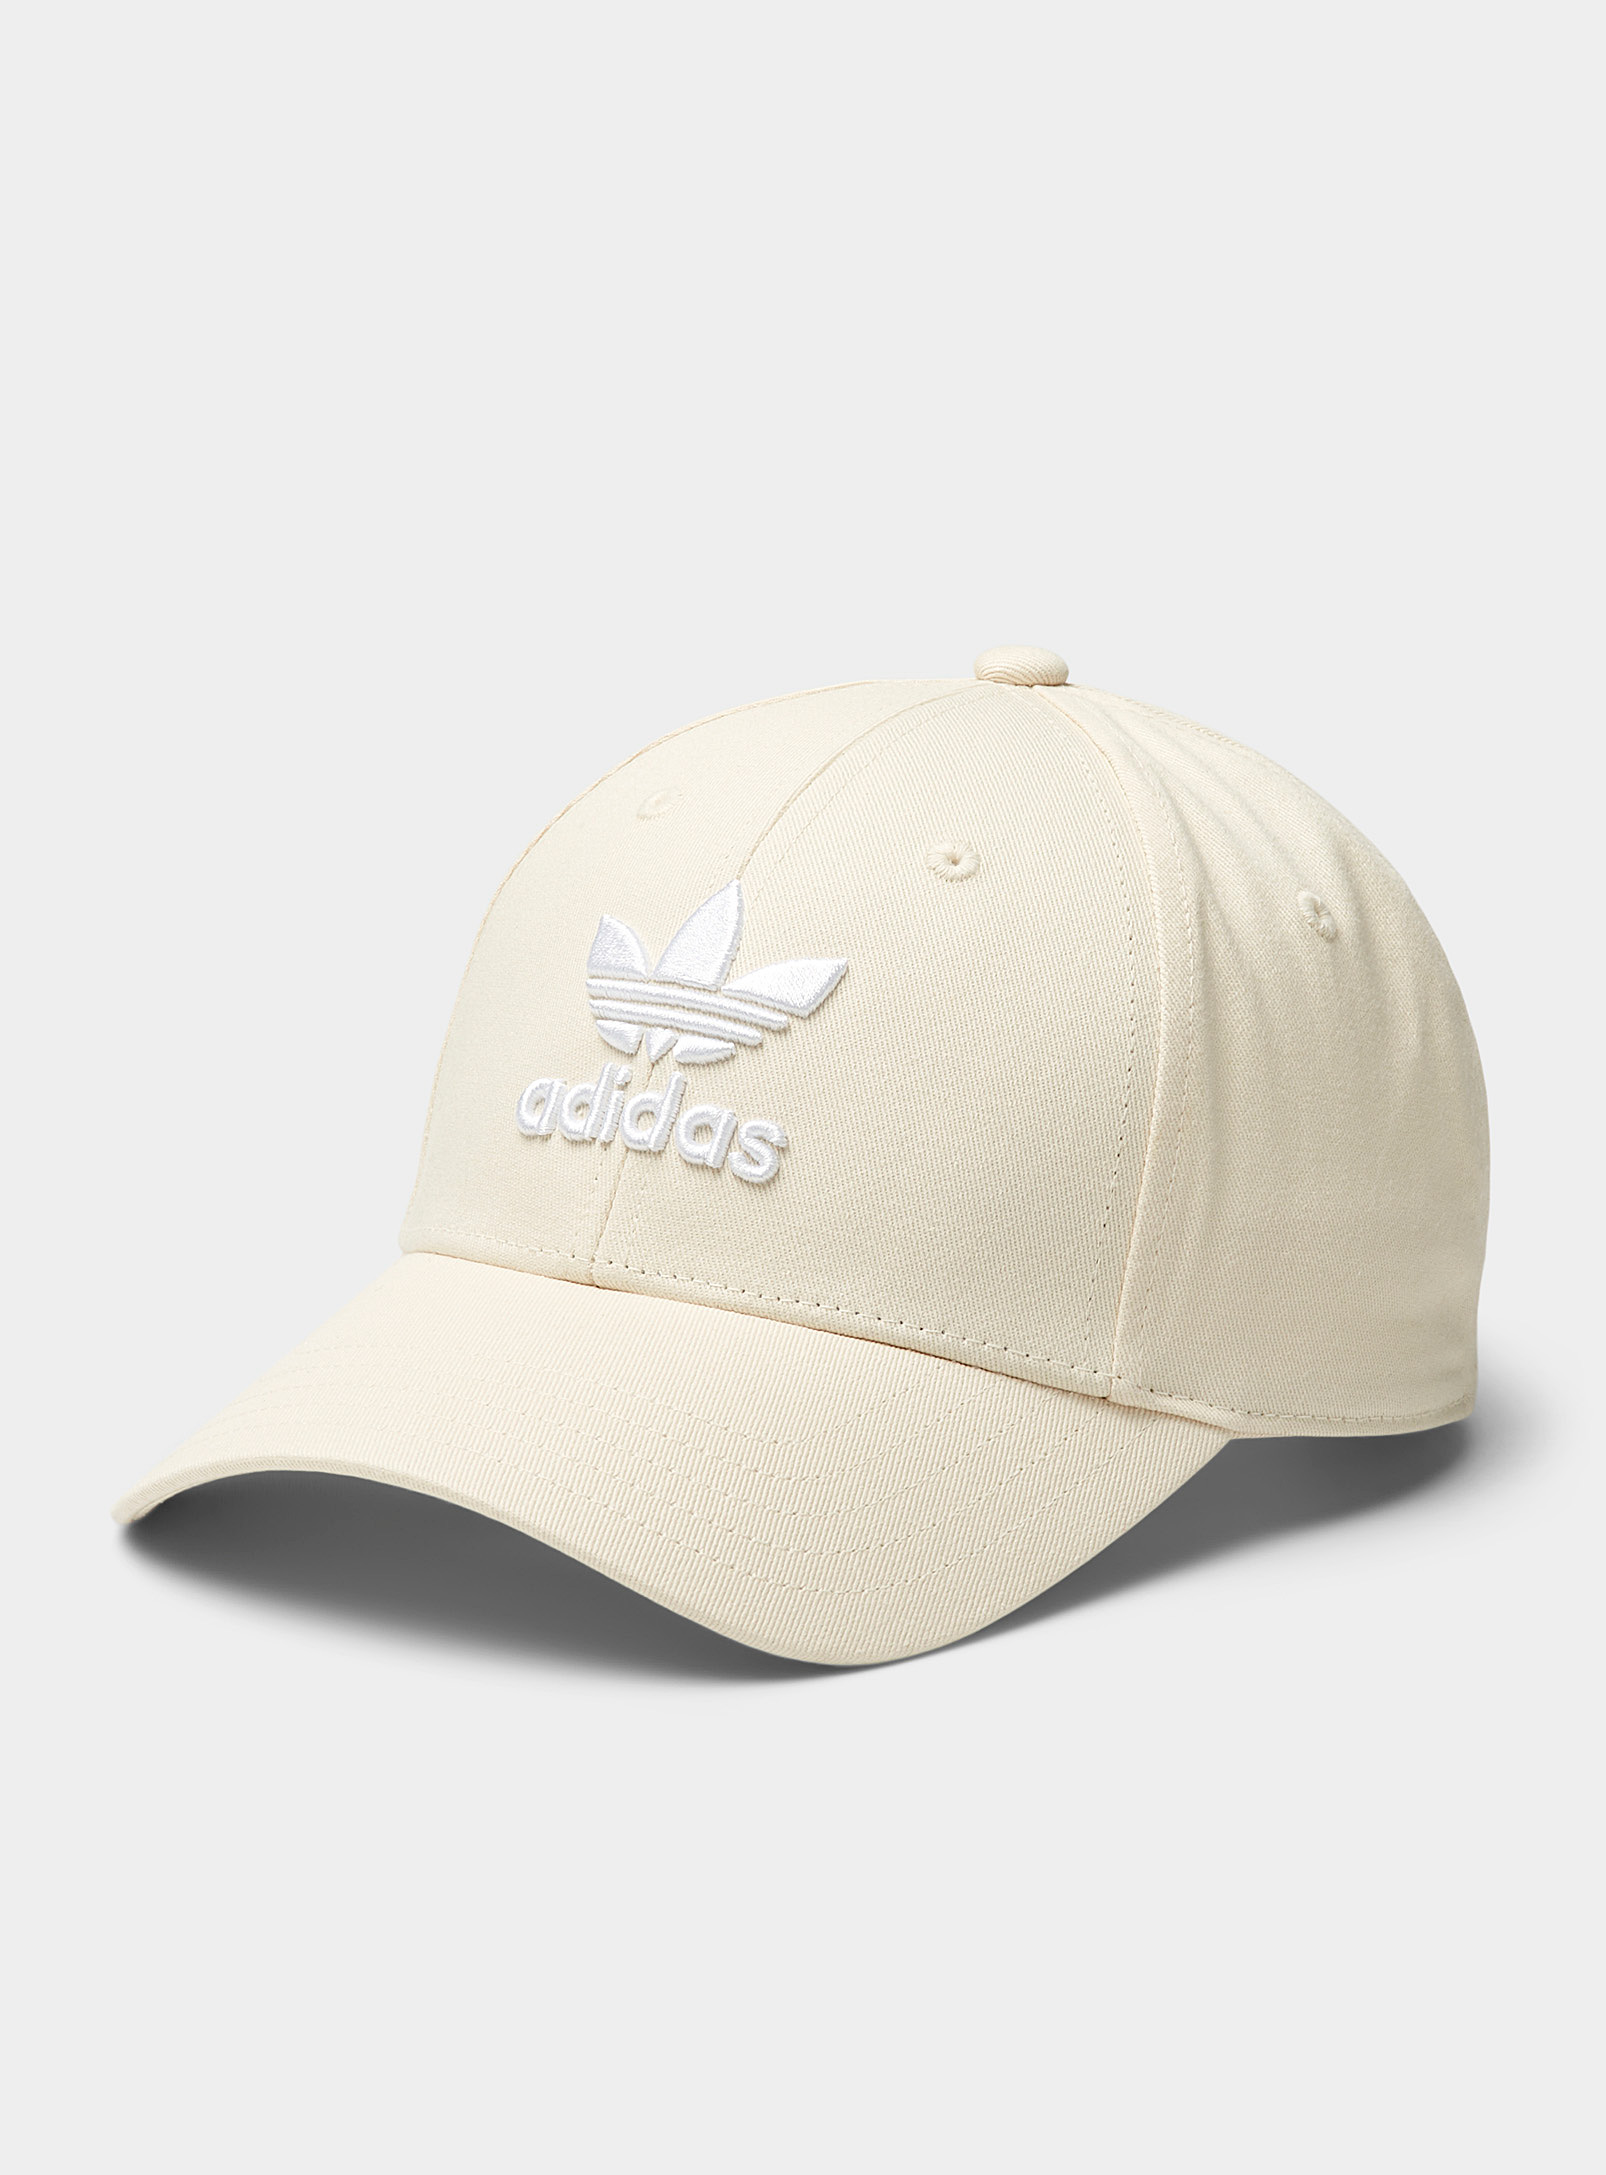 Adidas Originals Logo Embroidery Baseball Cap In Ivory White